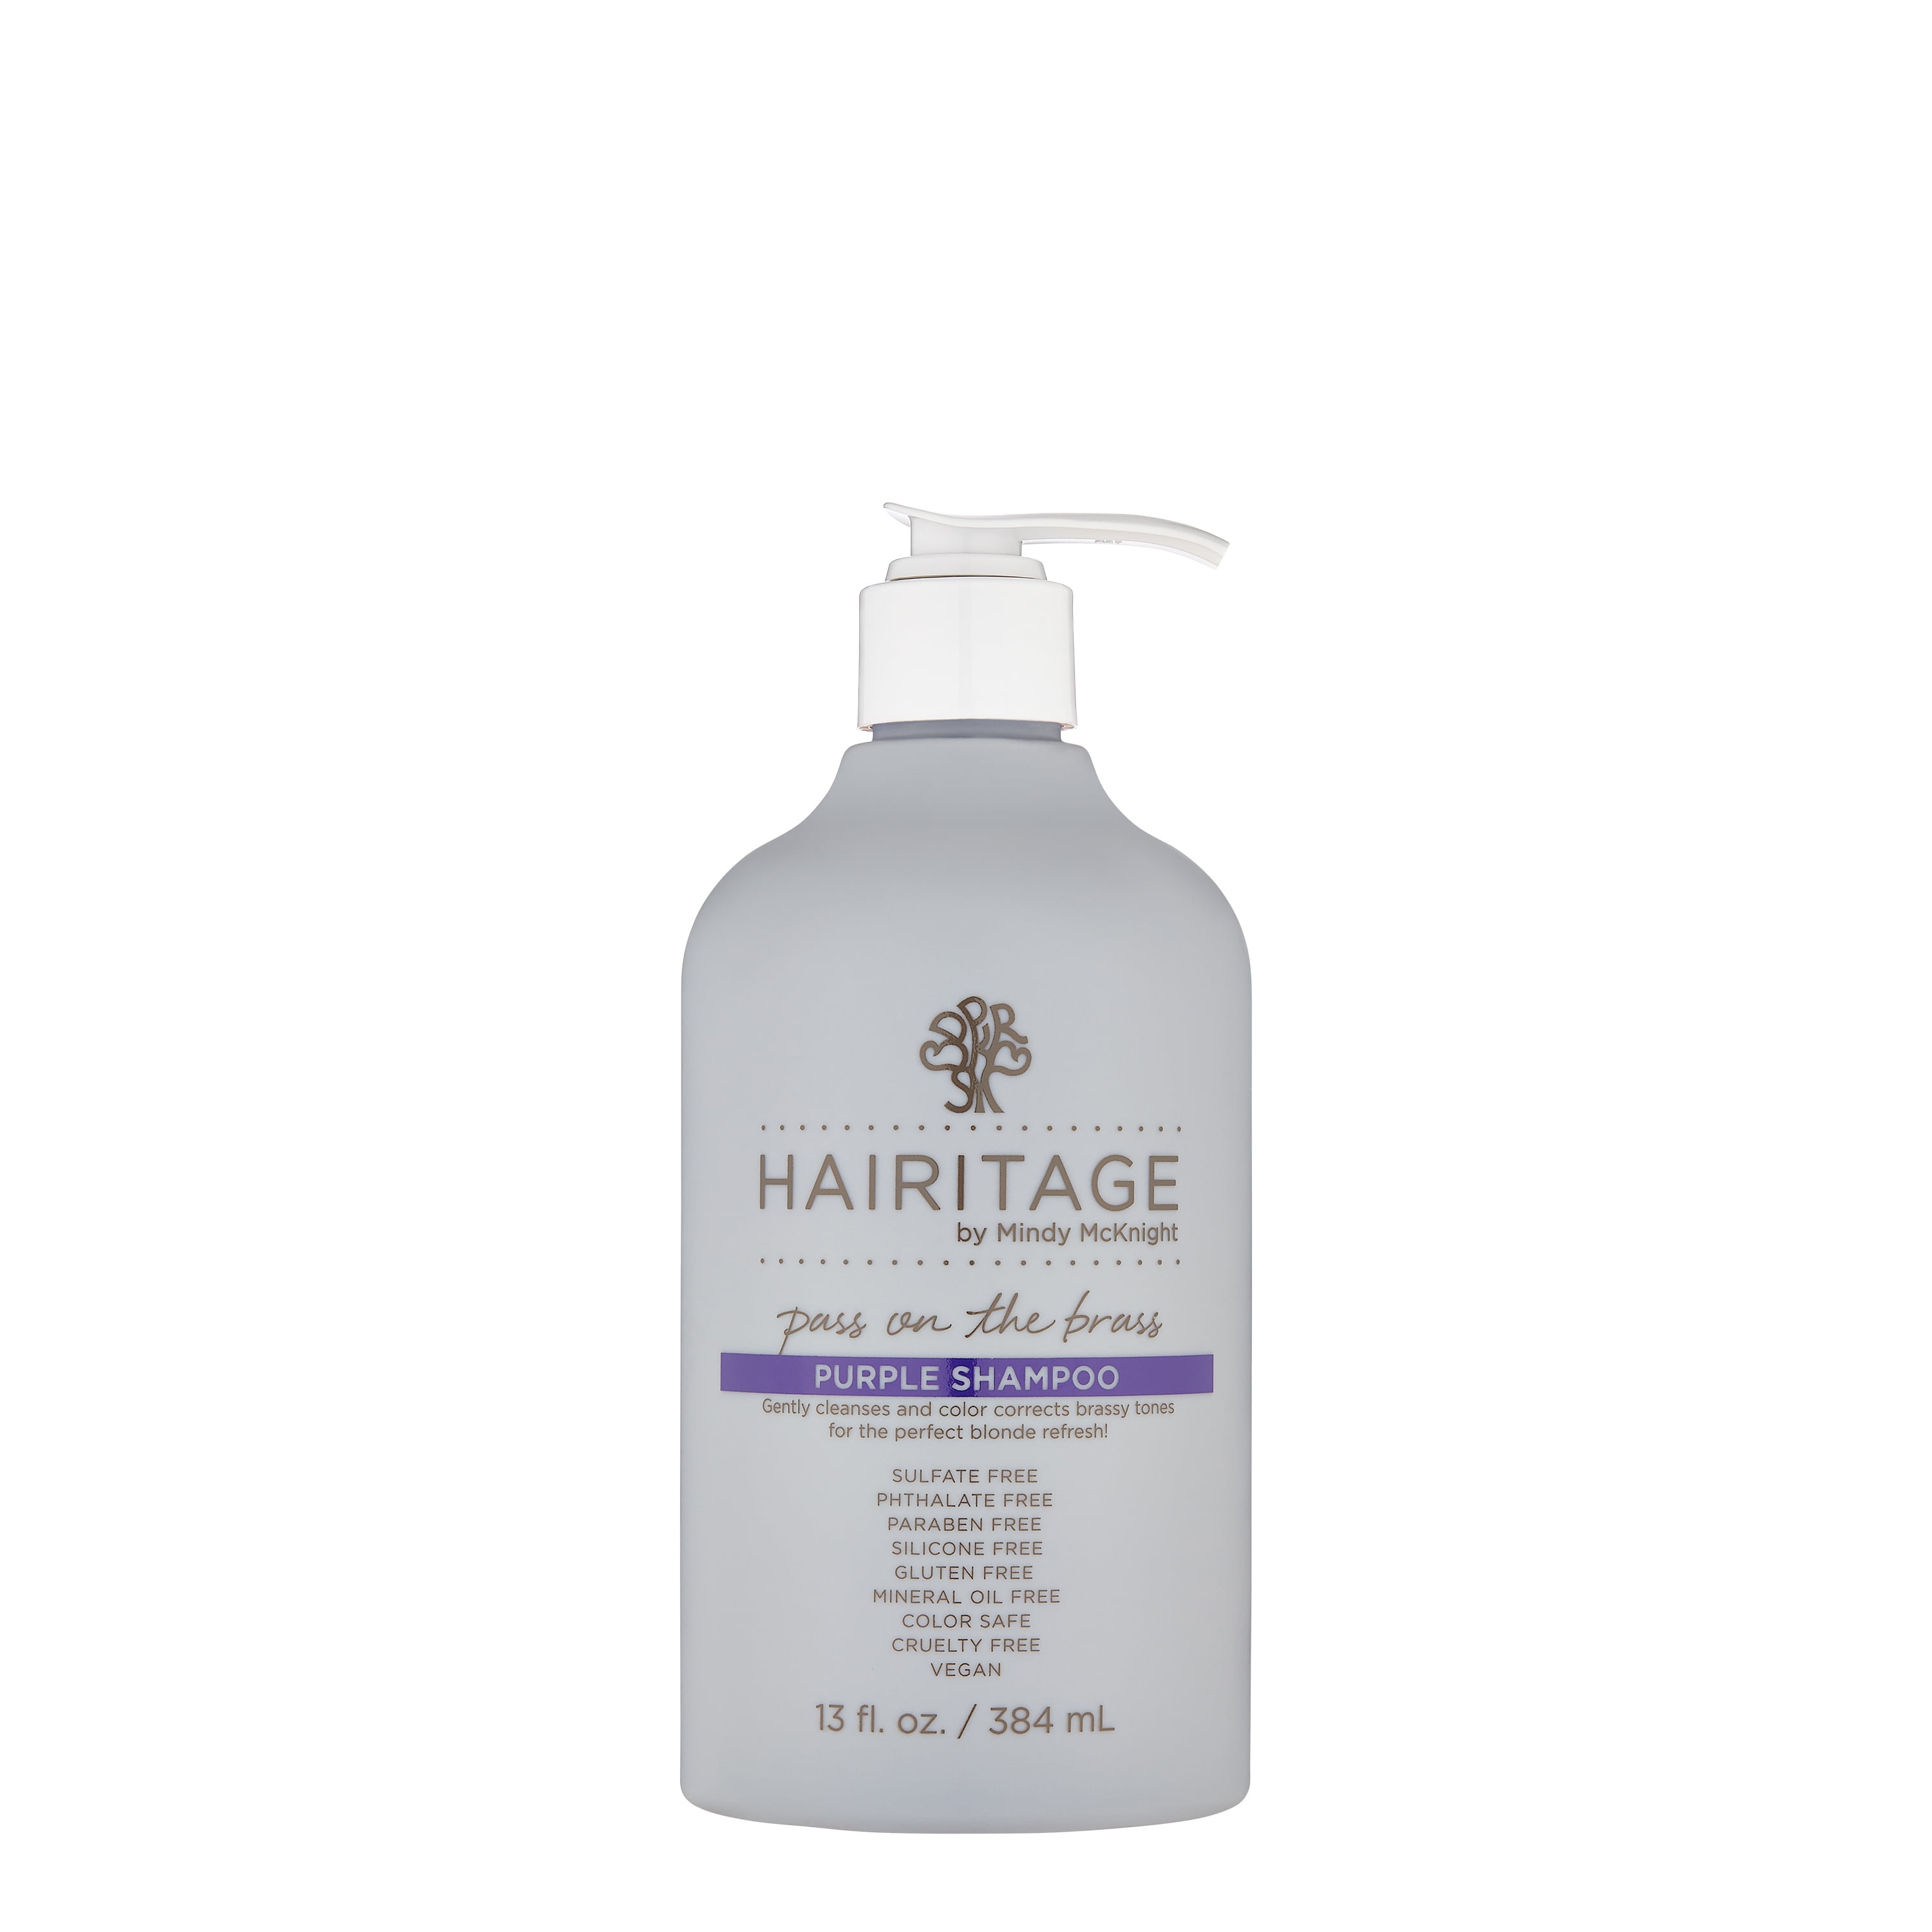 Hairitage Pass On The Brass Purple Shampoo 13 fl oz